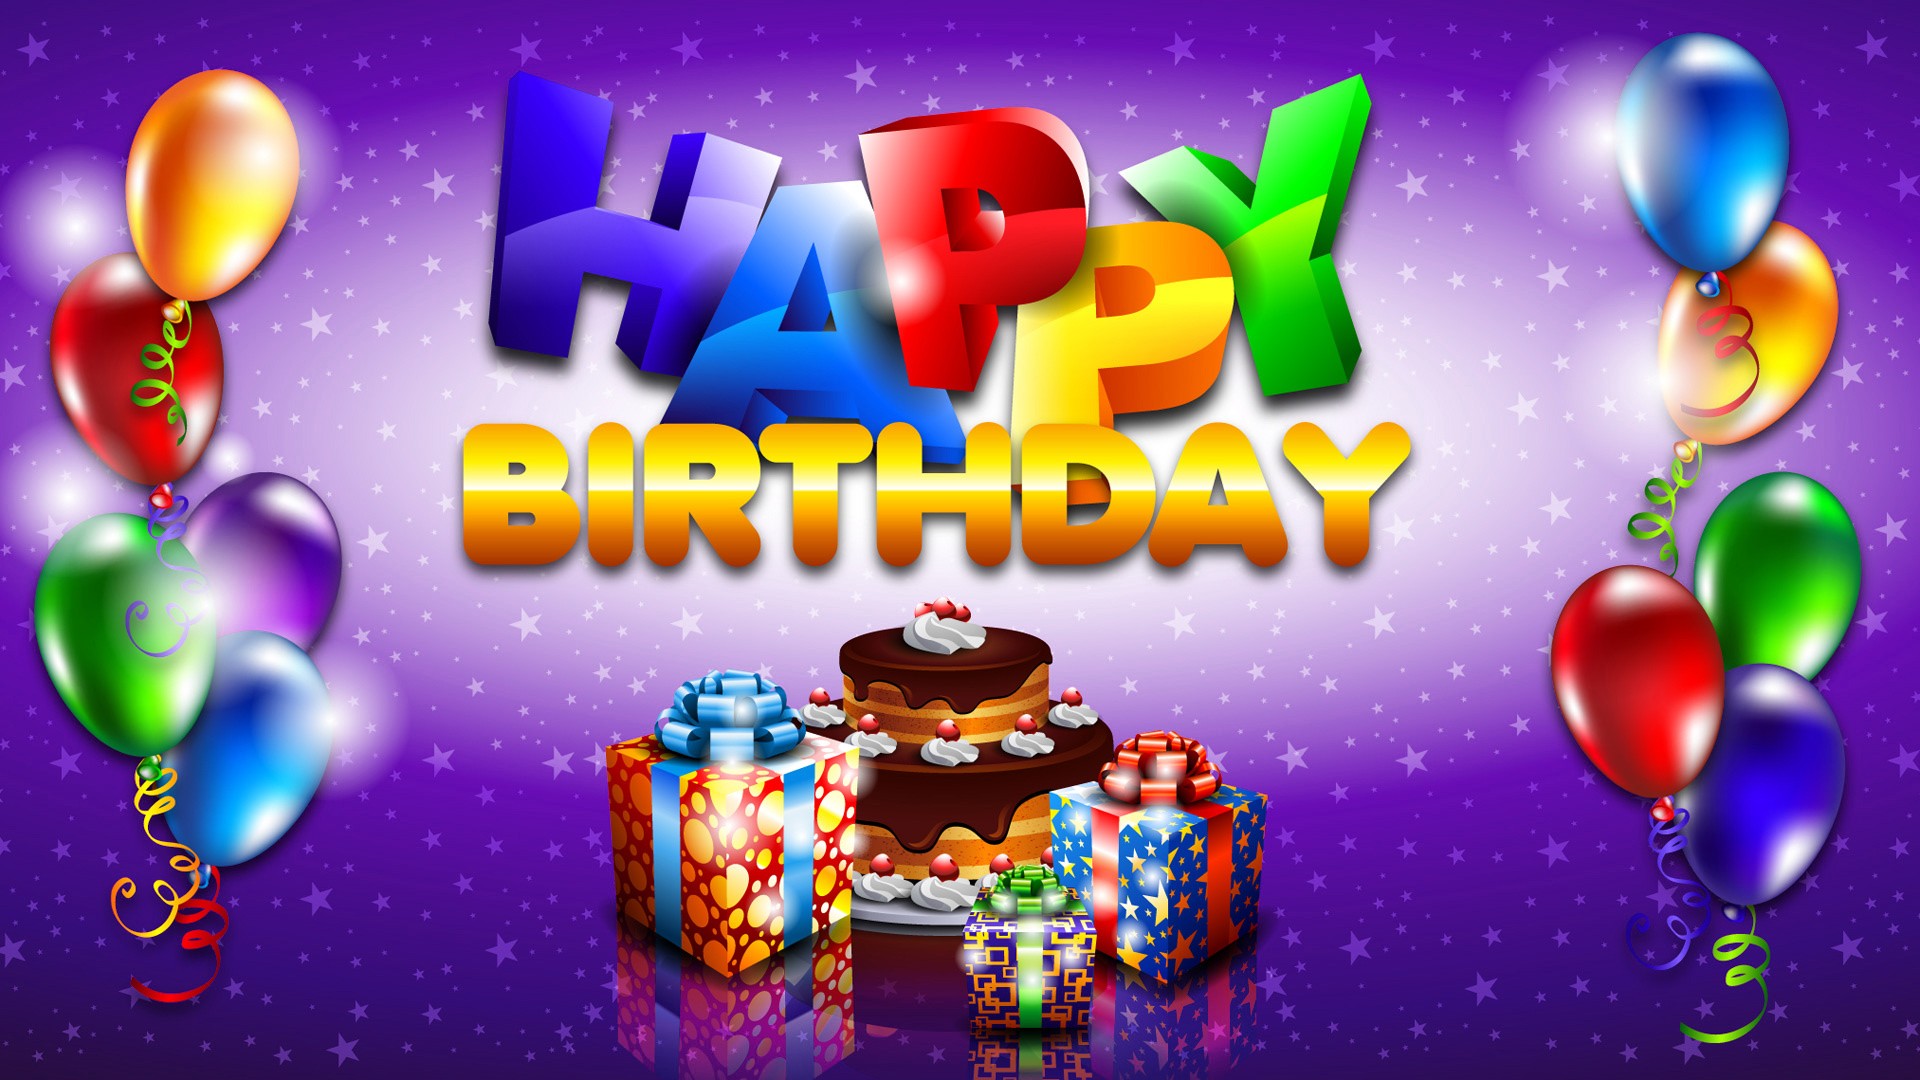 Happy Birthday  wallpaper   Download free full  HD  